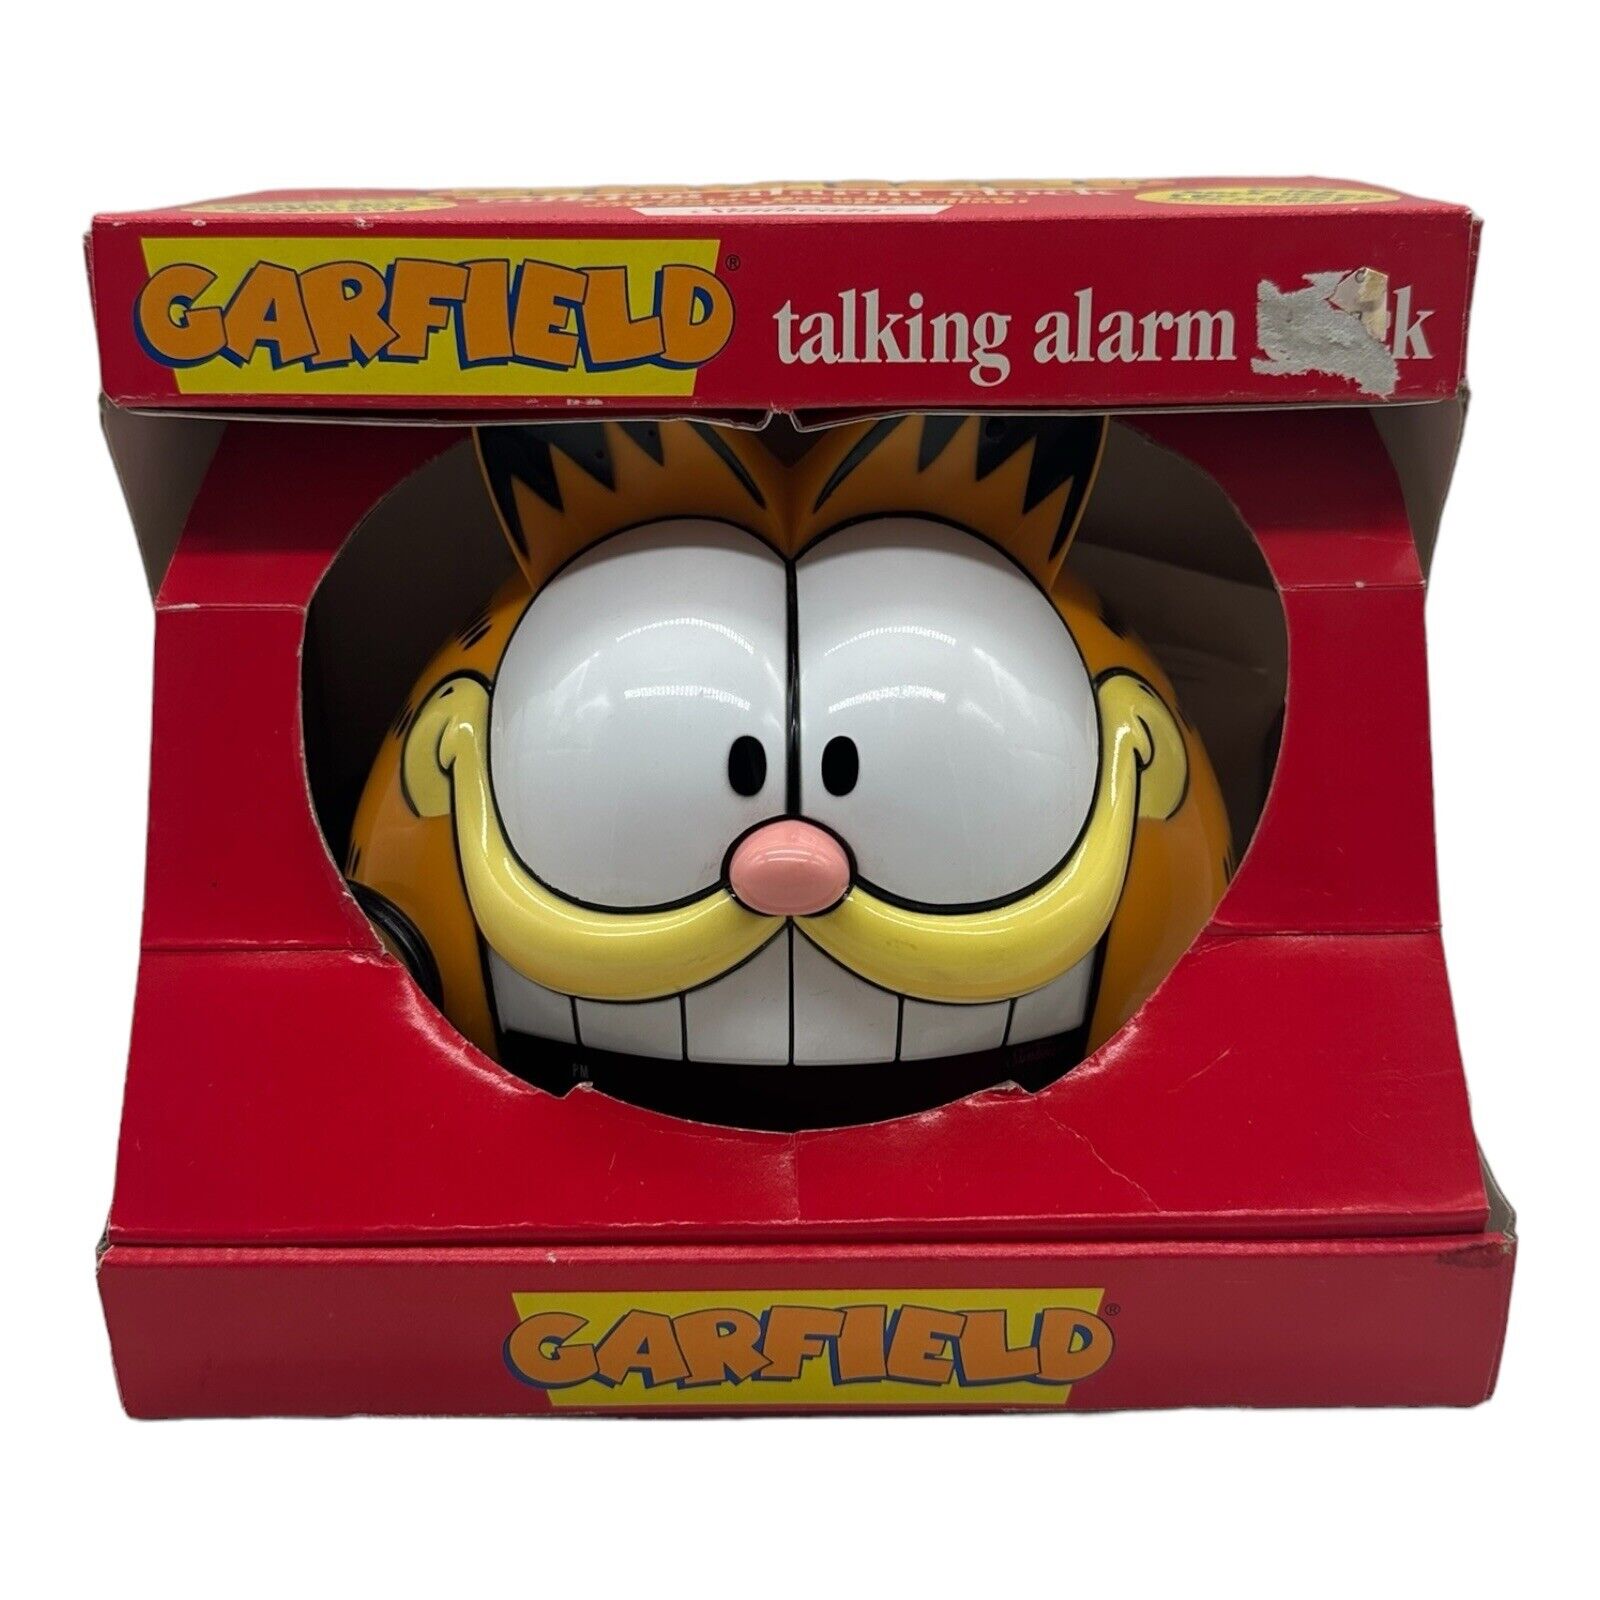 Vintage Garfield Talking Alarm Clock by Sunbeam 1993 887-109 - Brand New